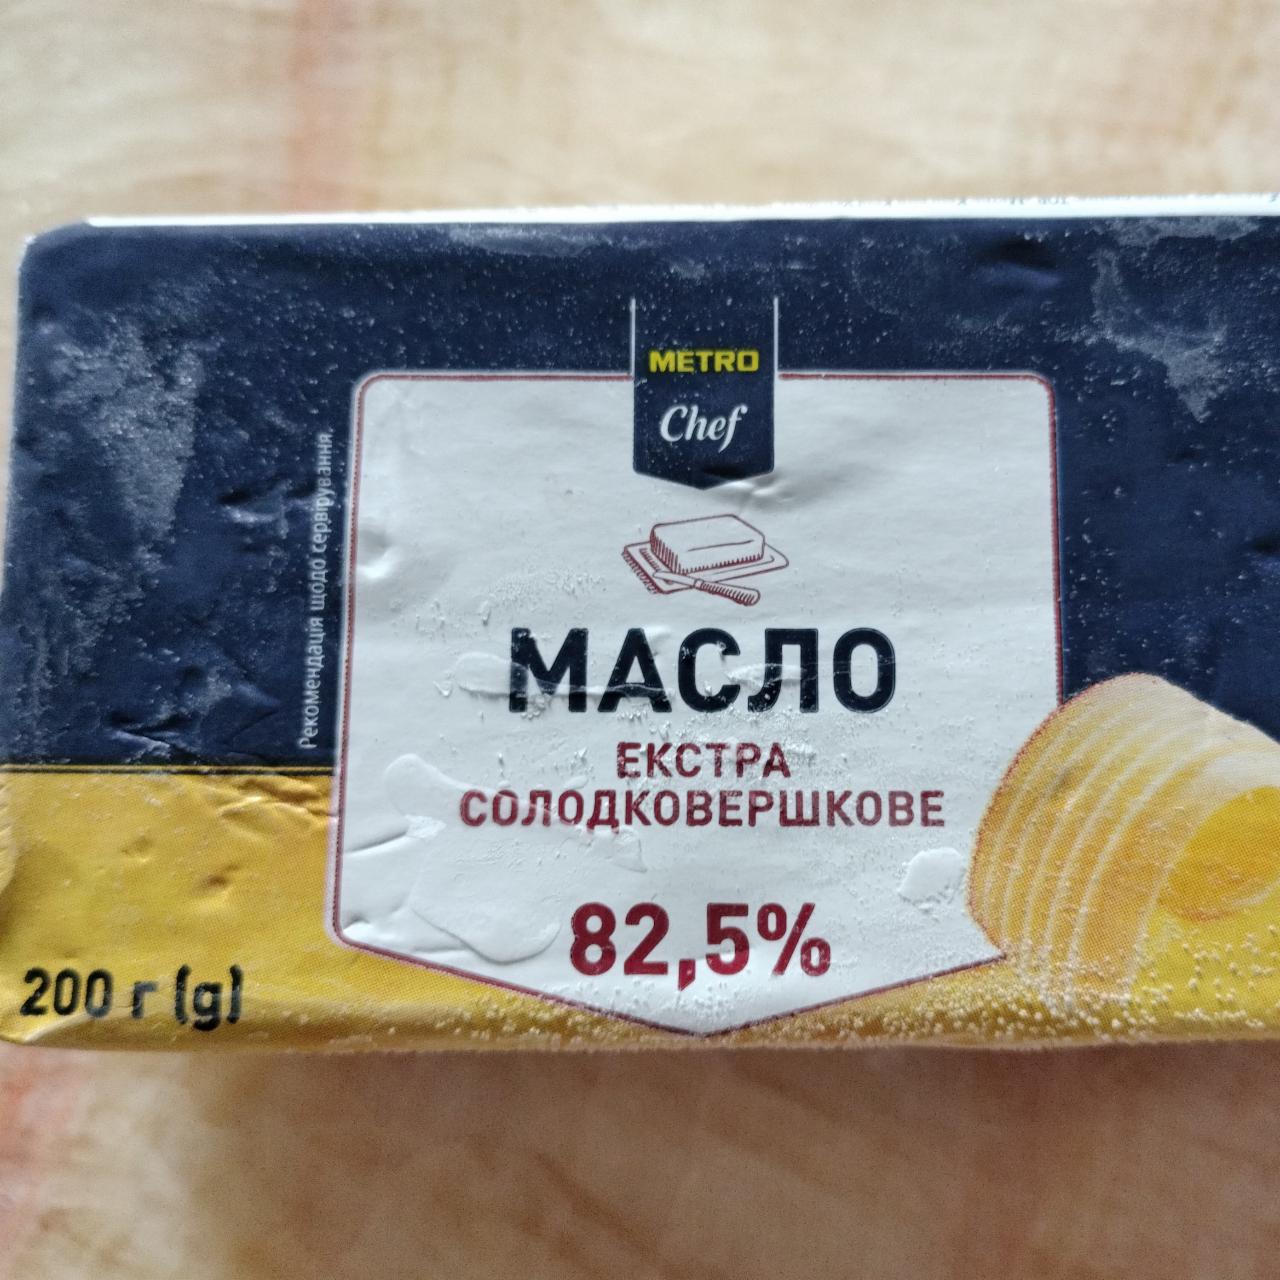 Фото - Масло сладкосливочное 82.5% Экстра Metro Chef